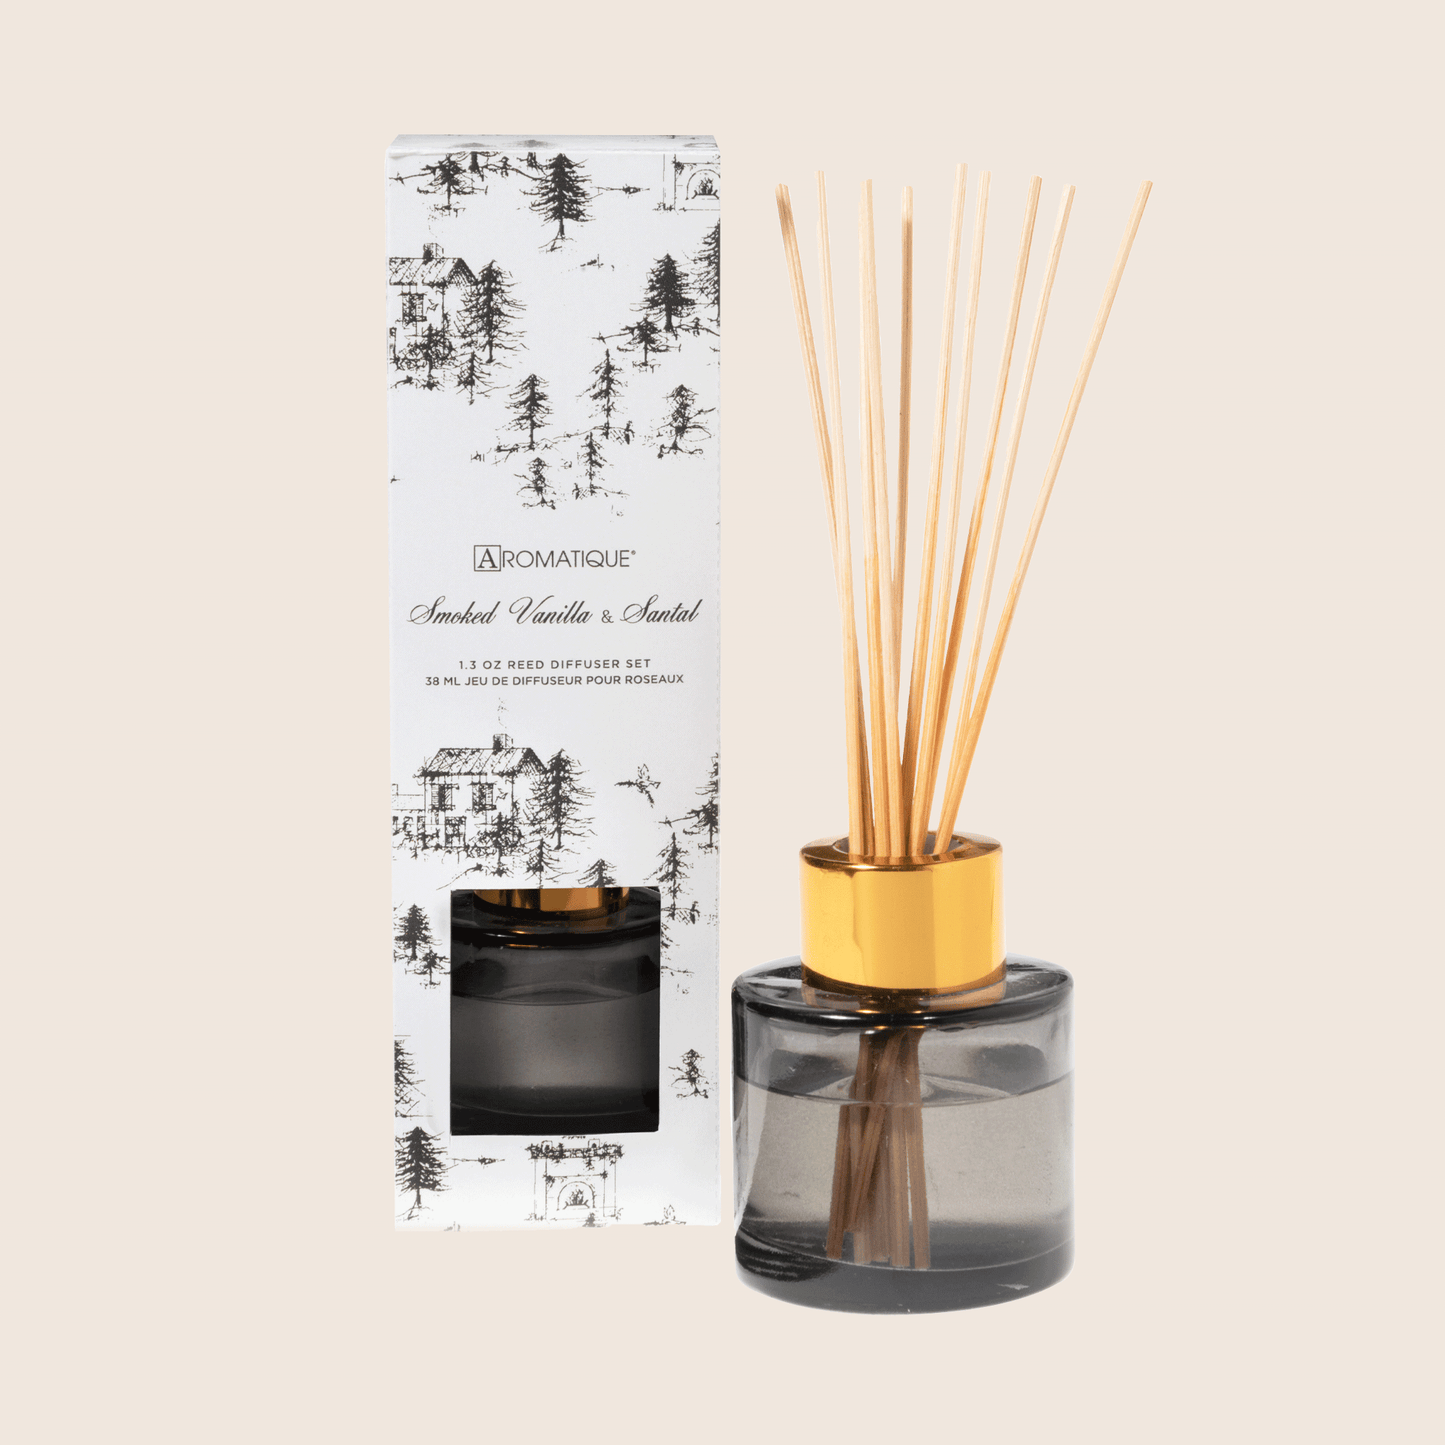 Smoked Vanilla & Santal - Mini Diffuser Set